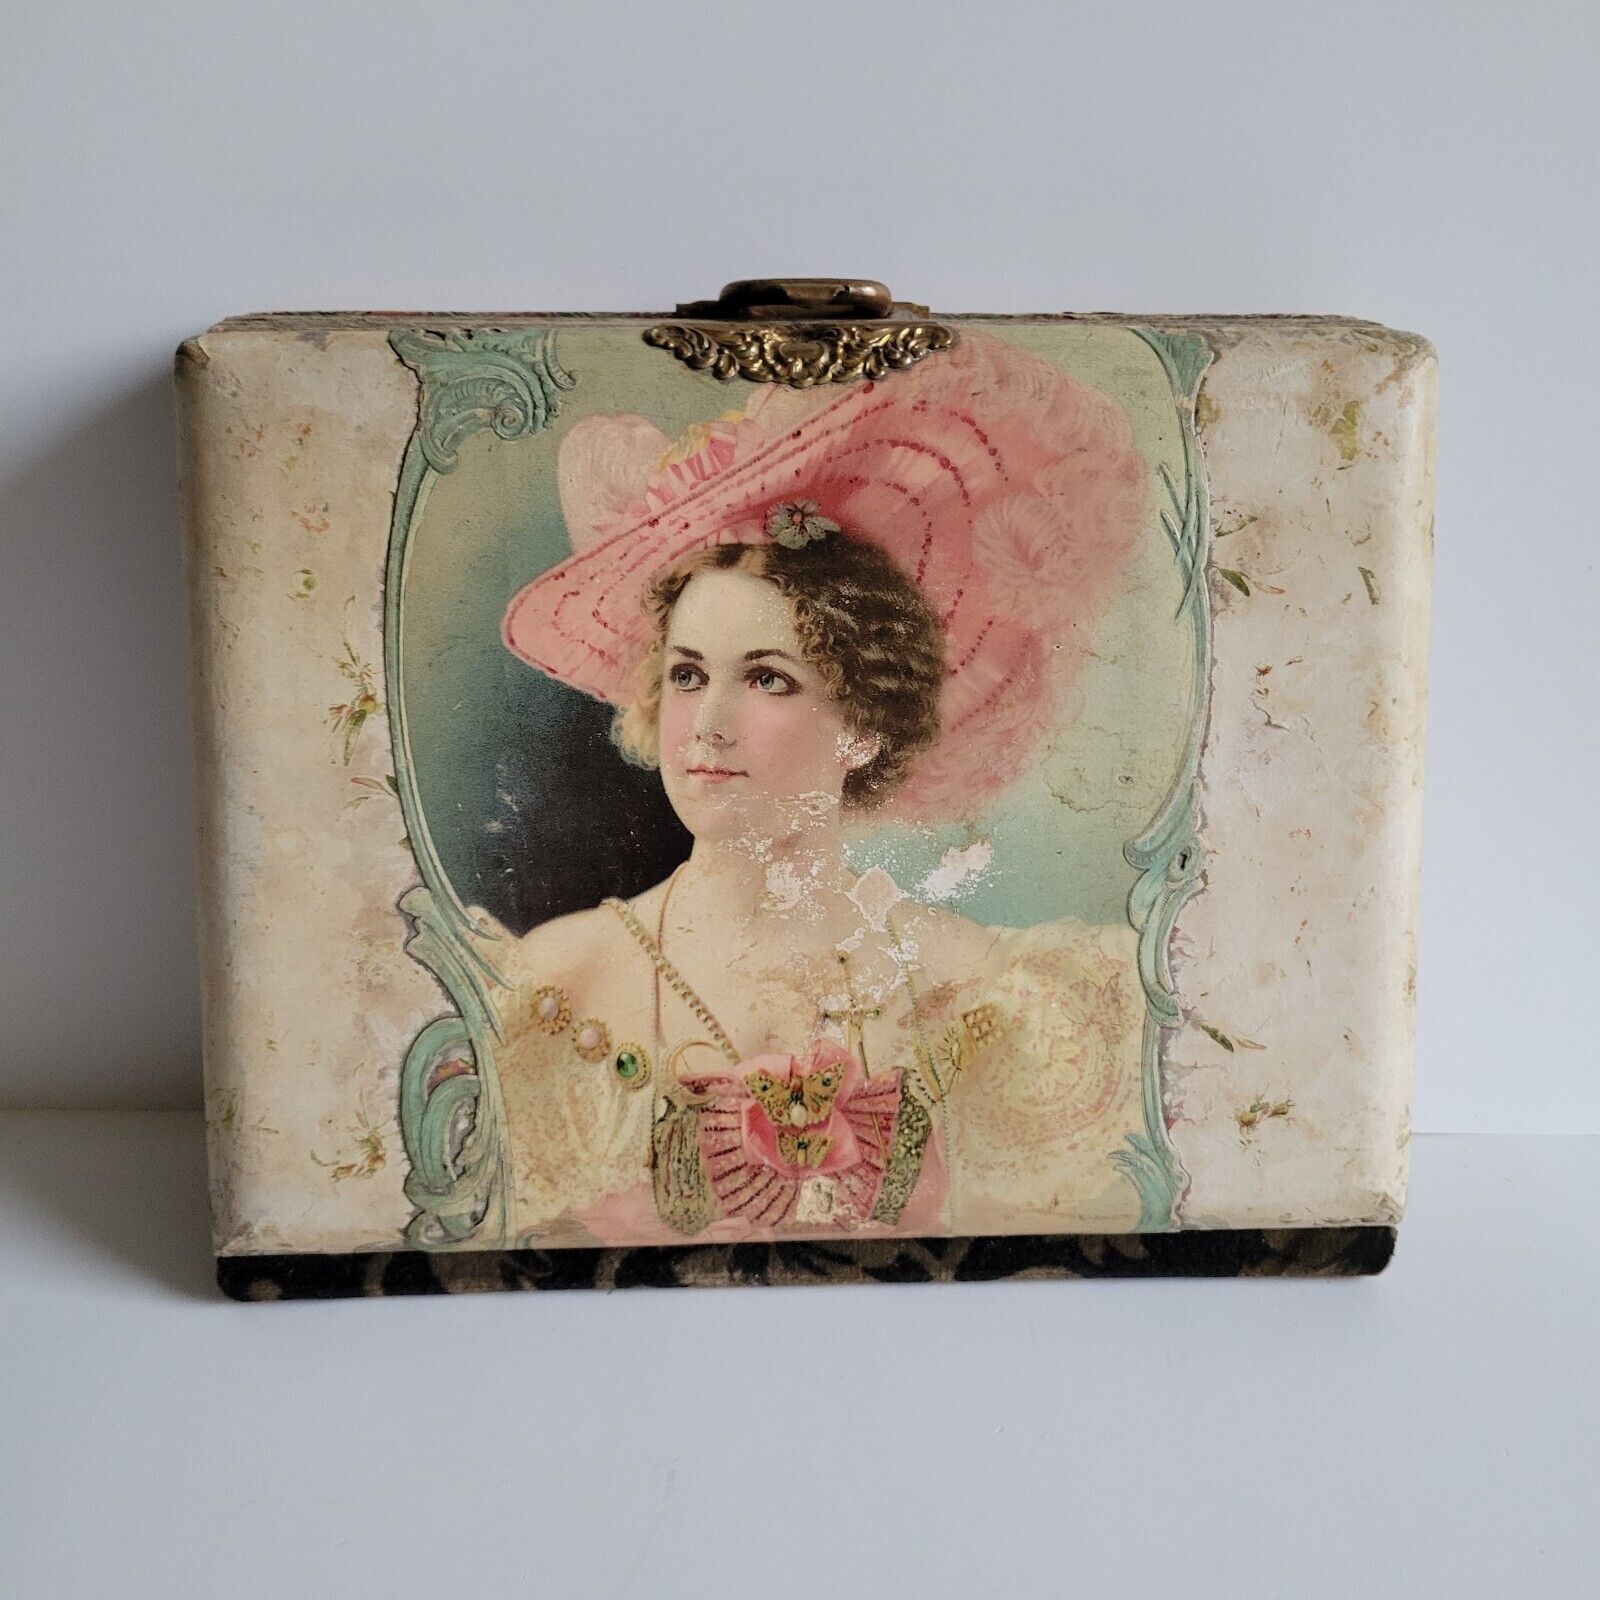 Antique Milady Portrait Original Hardware & Stand Photos Included Family Album 